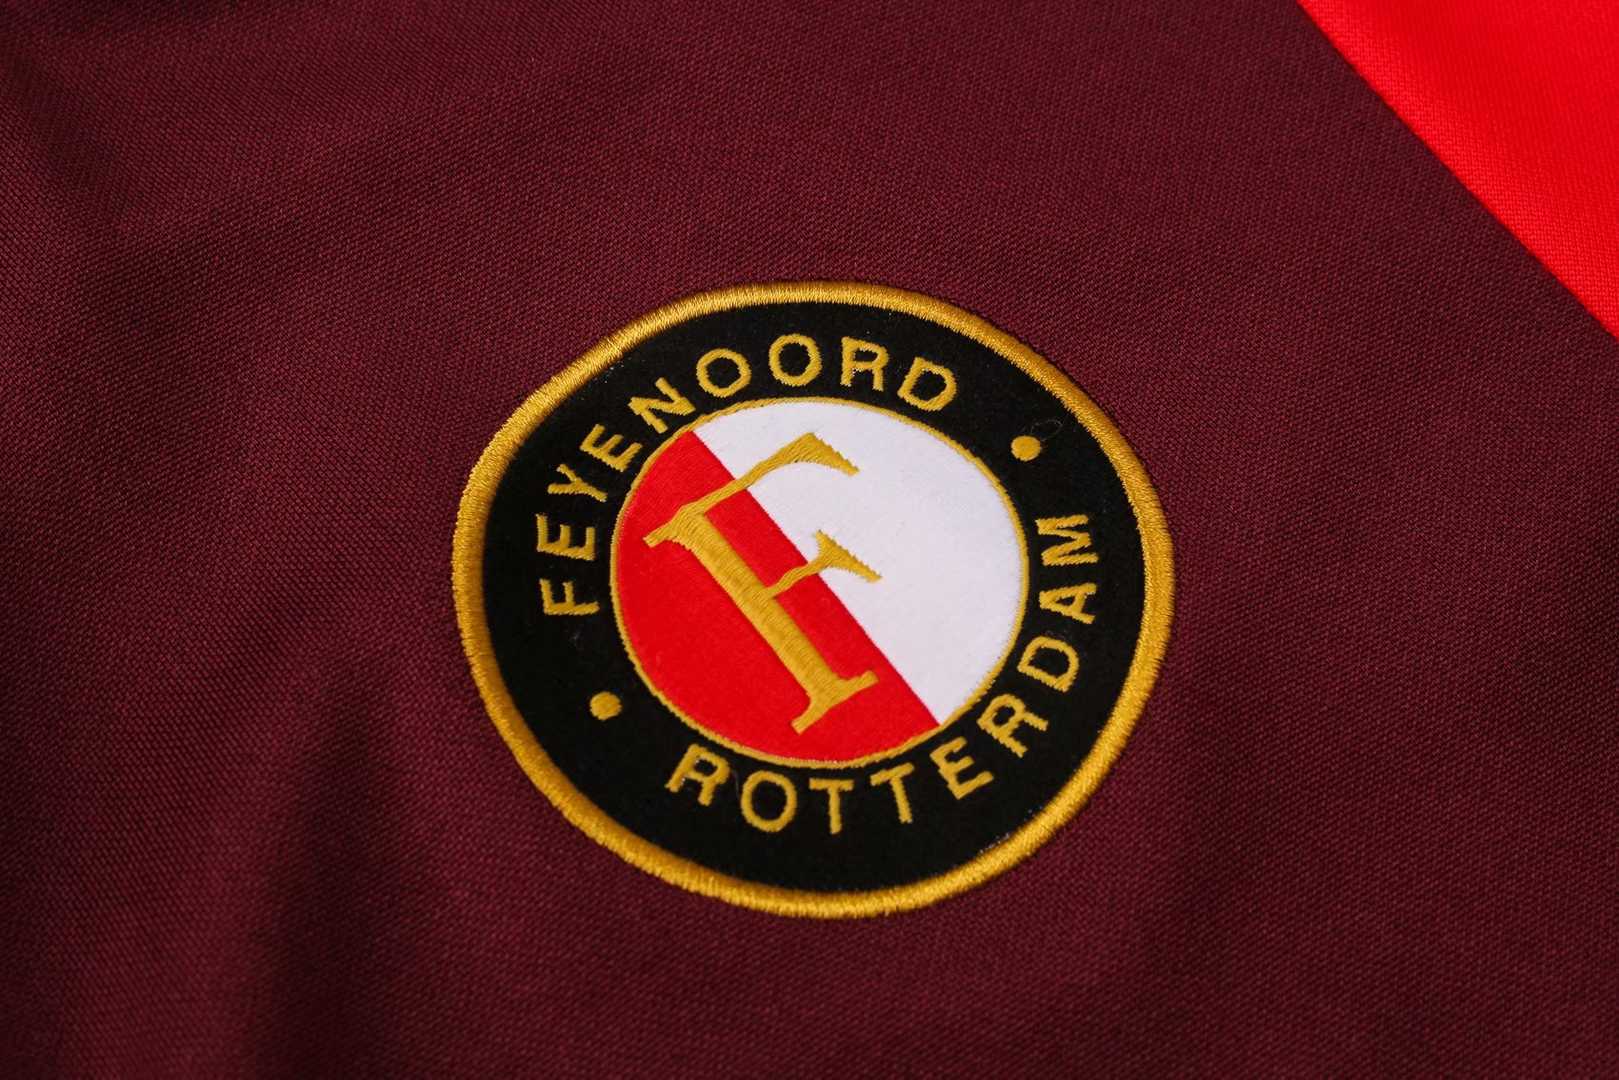 2019/20 Feyenoord Rotterdam High Neck Red Mens Soccer Training Suit(Jacket + Pants)